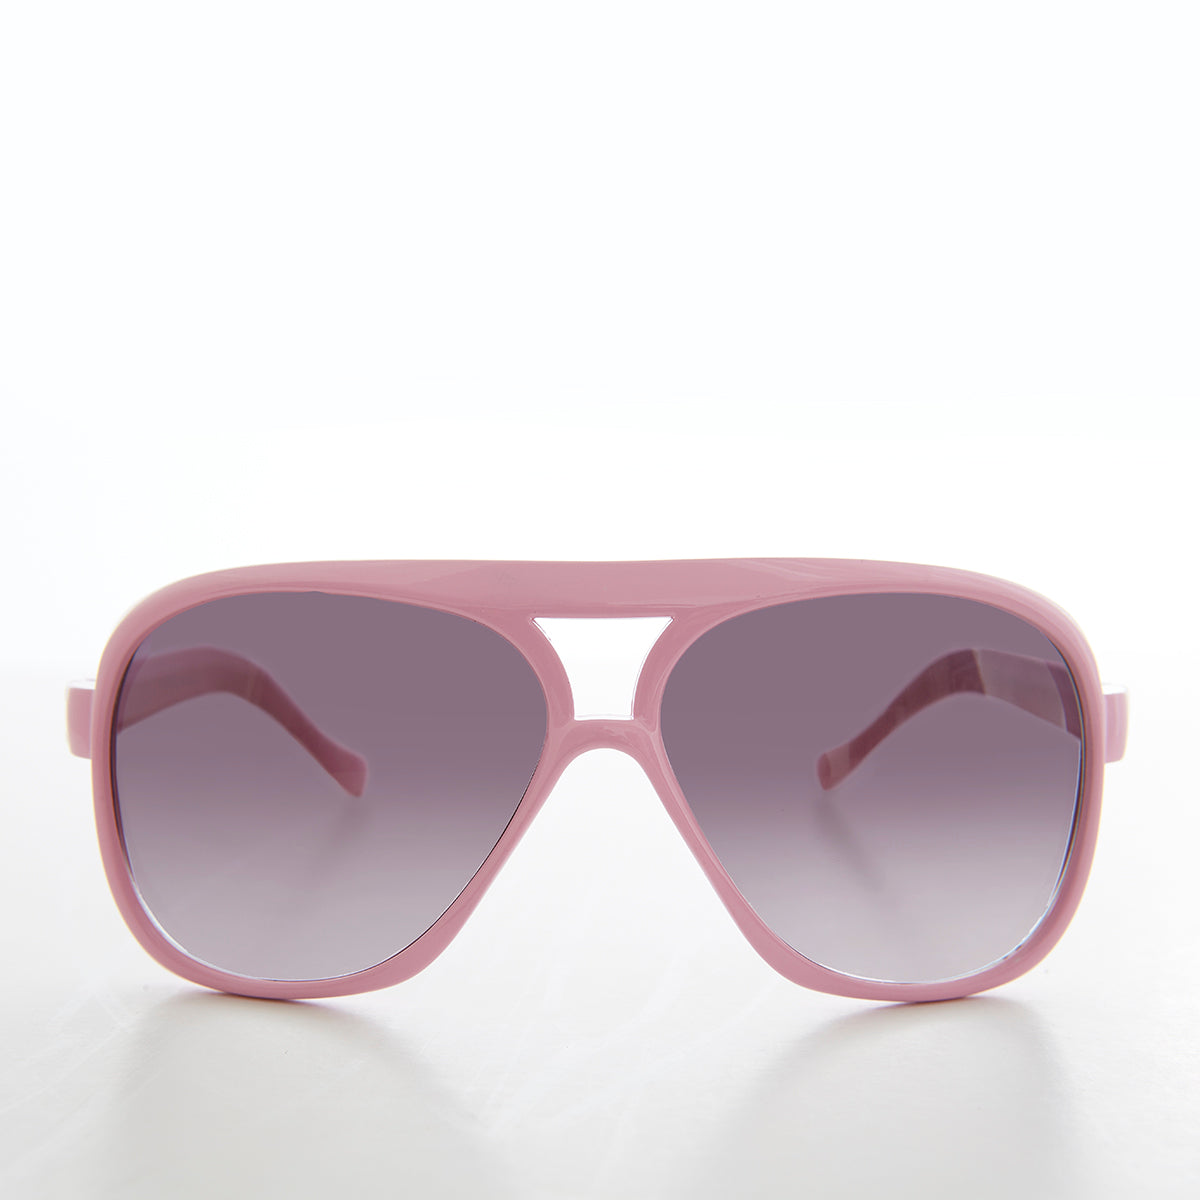 L6258-PINK-RV-BLACK Aviators Wholesale Sunglasses - Frontier Fashion, Inc.